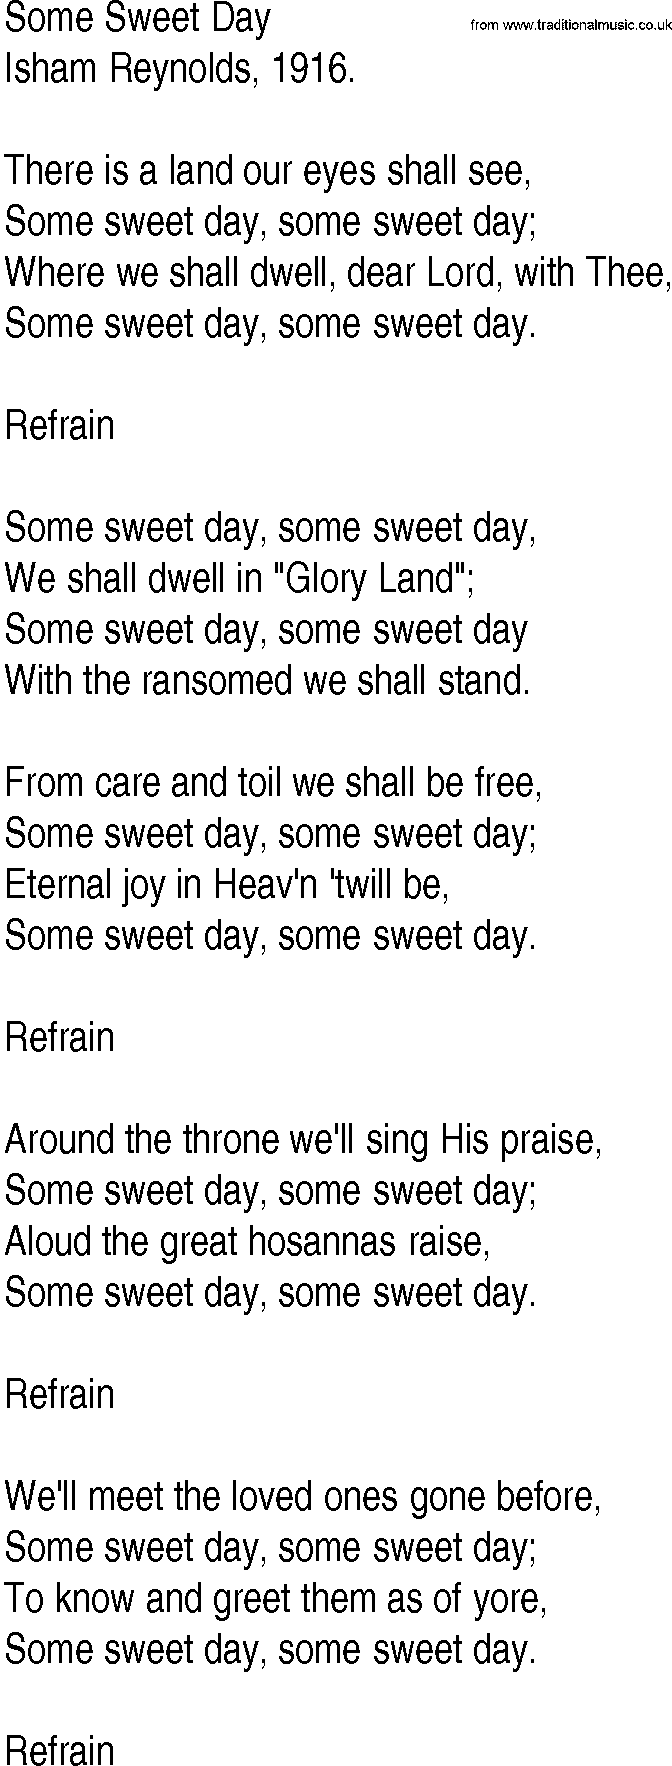 Hymn and Gospel Song: Some Sweet Day by Isham Reynolds lyrics